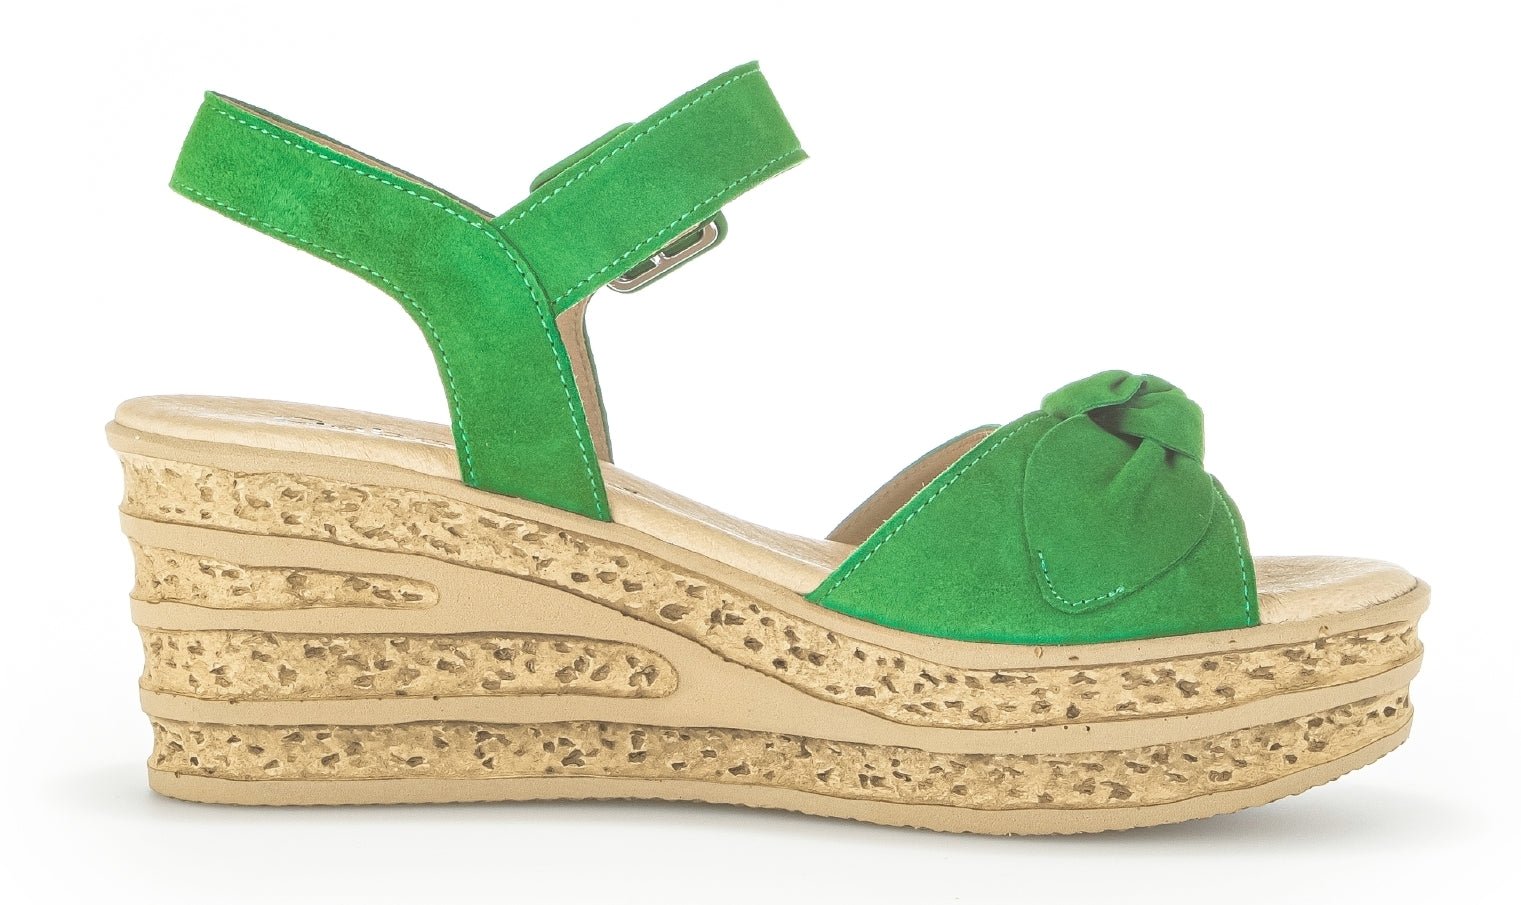 '44.653.19' women's sandal - Green - Chaplinshoes'44.653.19' women's sandal - GreenGabor